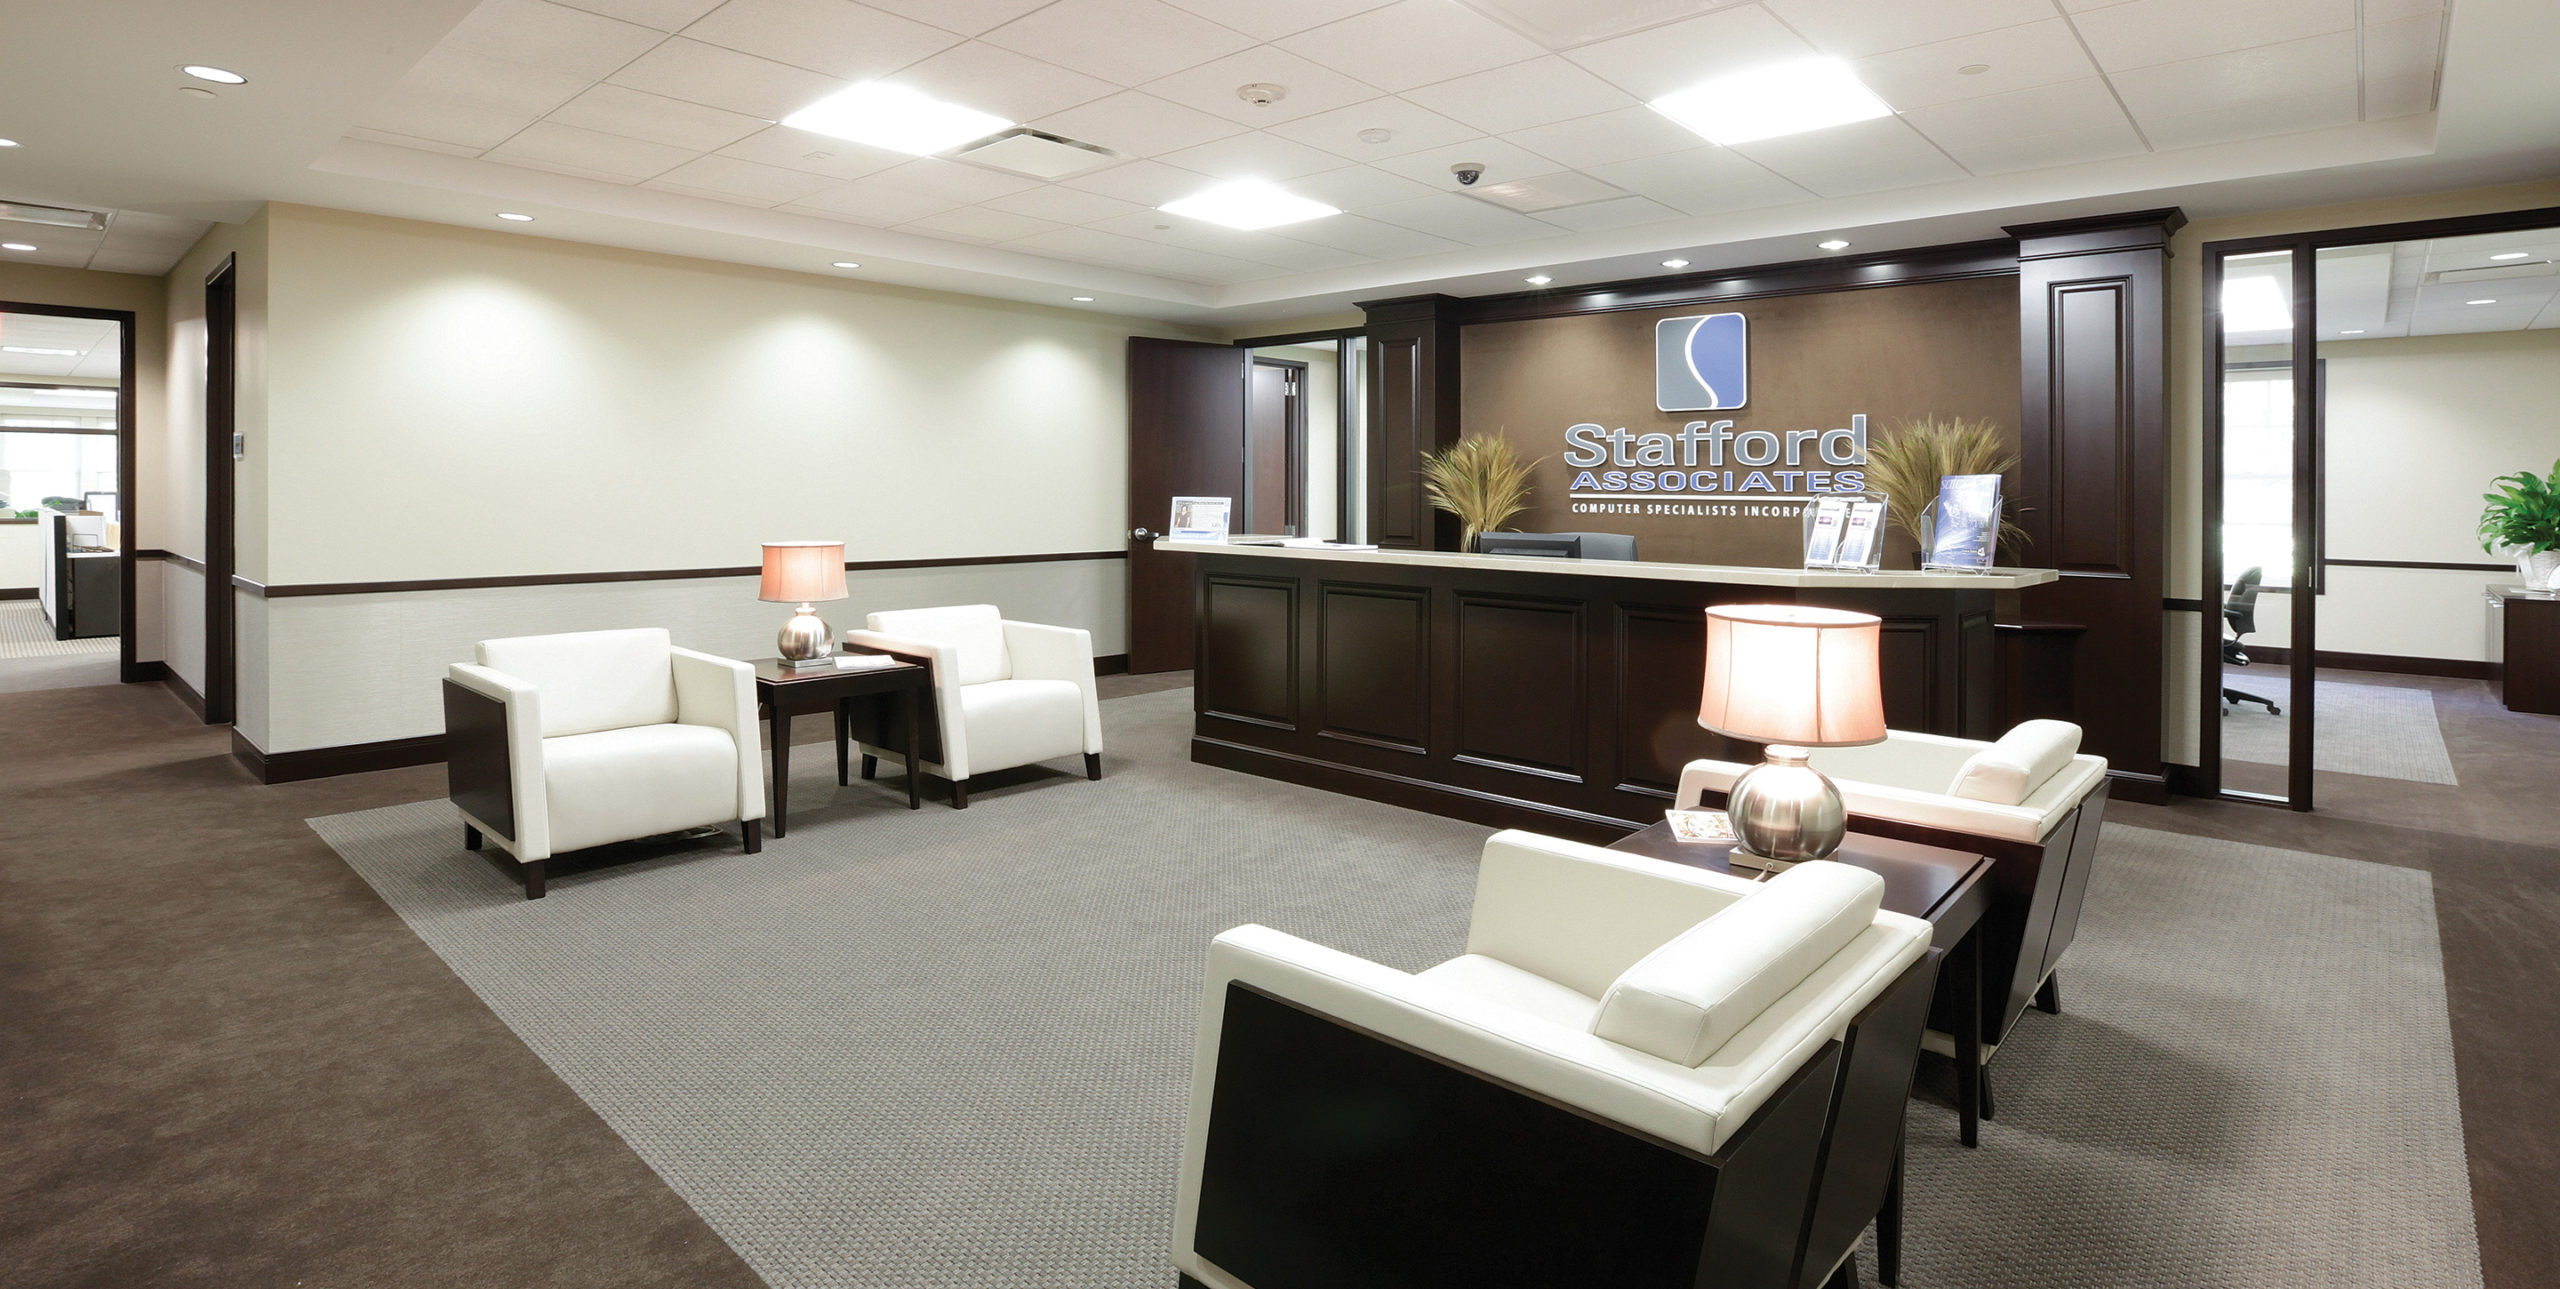 Executive lobby at Stafford Associates